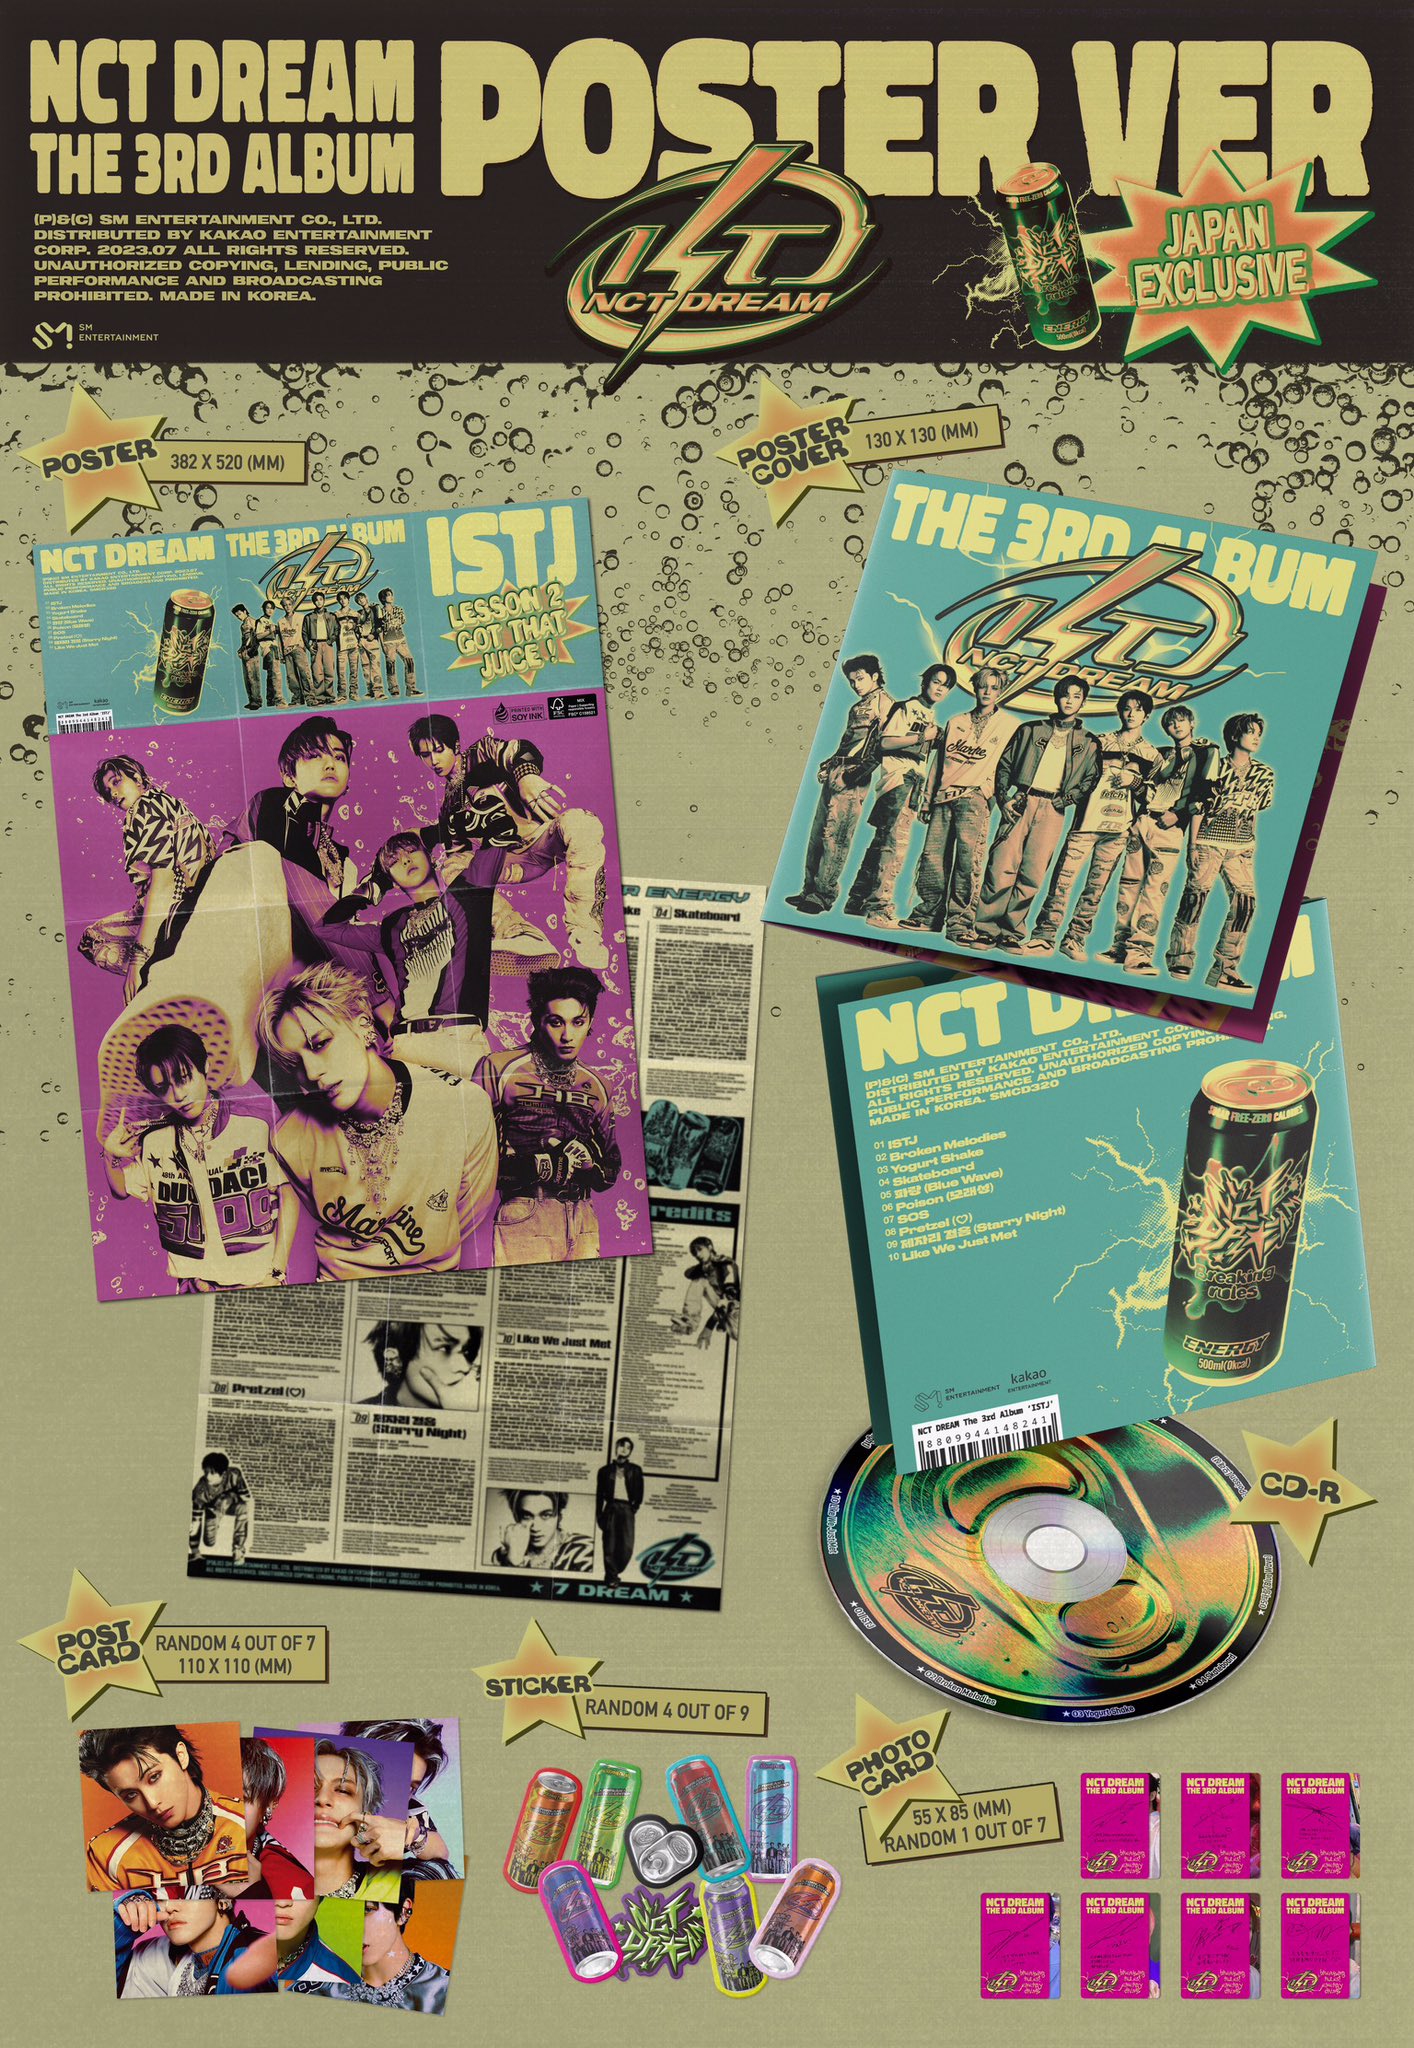 NCT DREAM ISTJ Music Plant 特典 トレカ ヘチャン K-POP | www ...